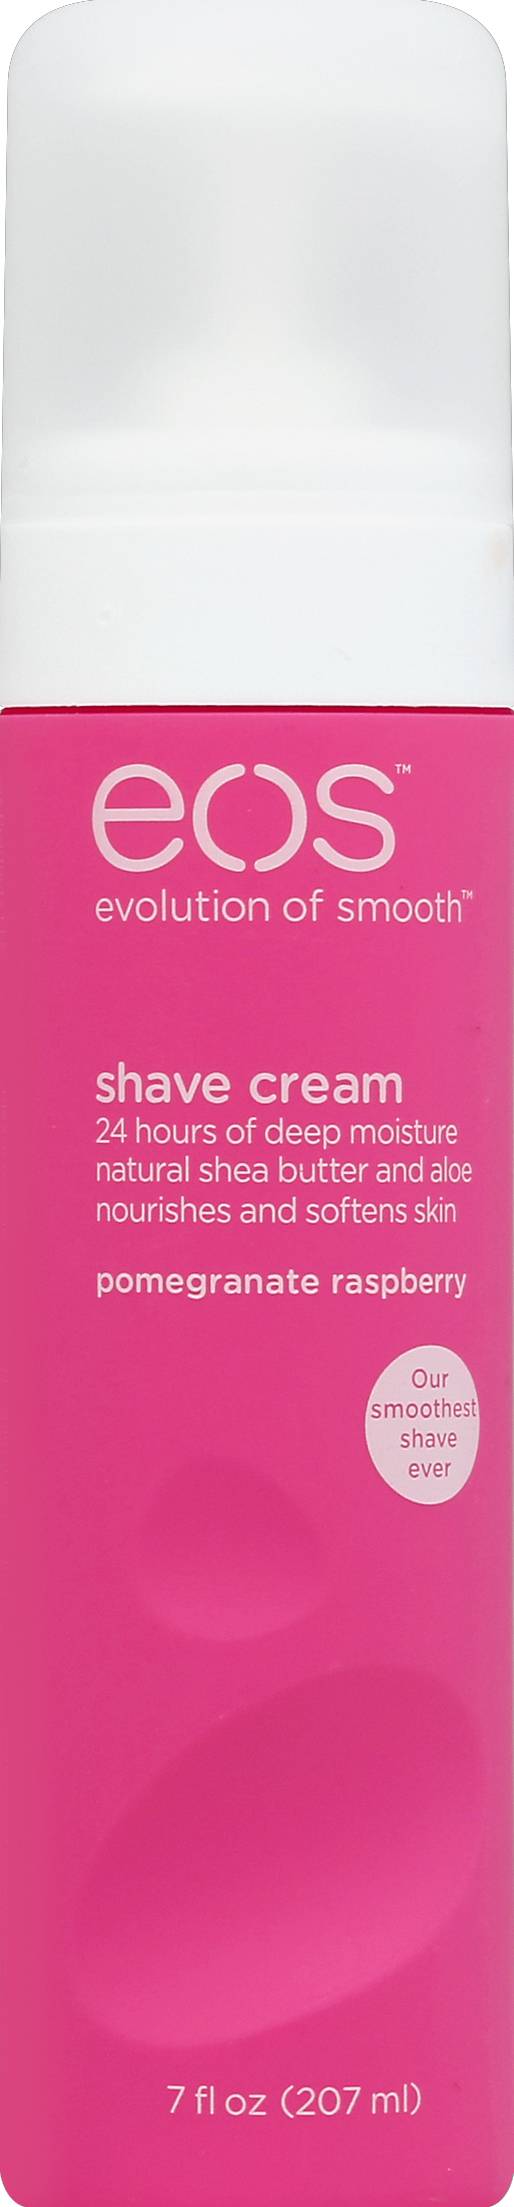 Eos Pomegranate Raspberry Shave Cream